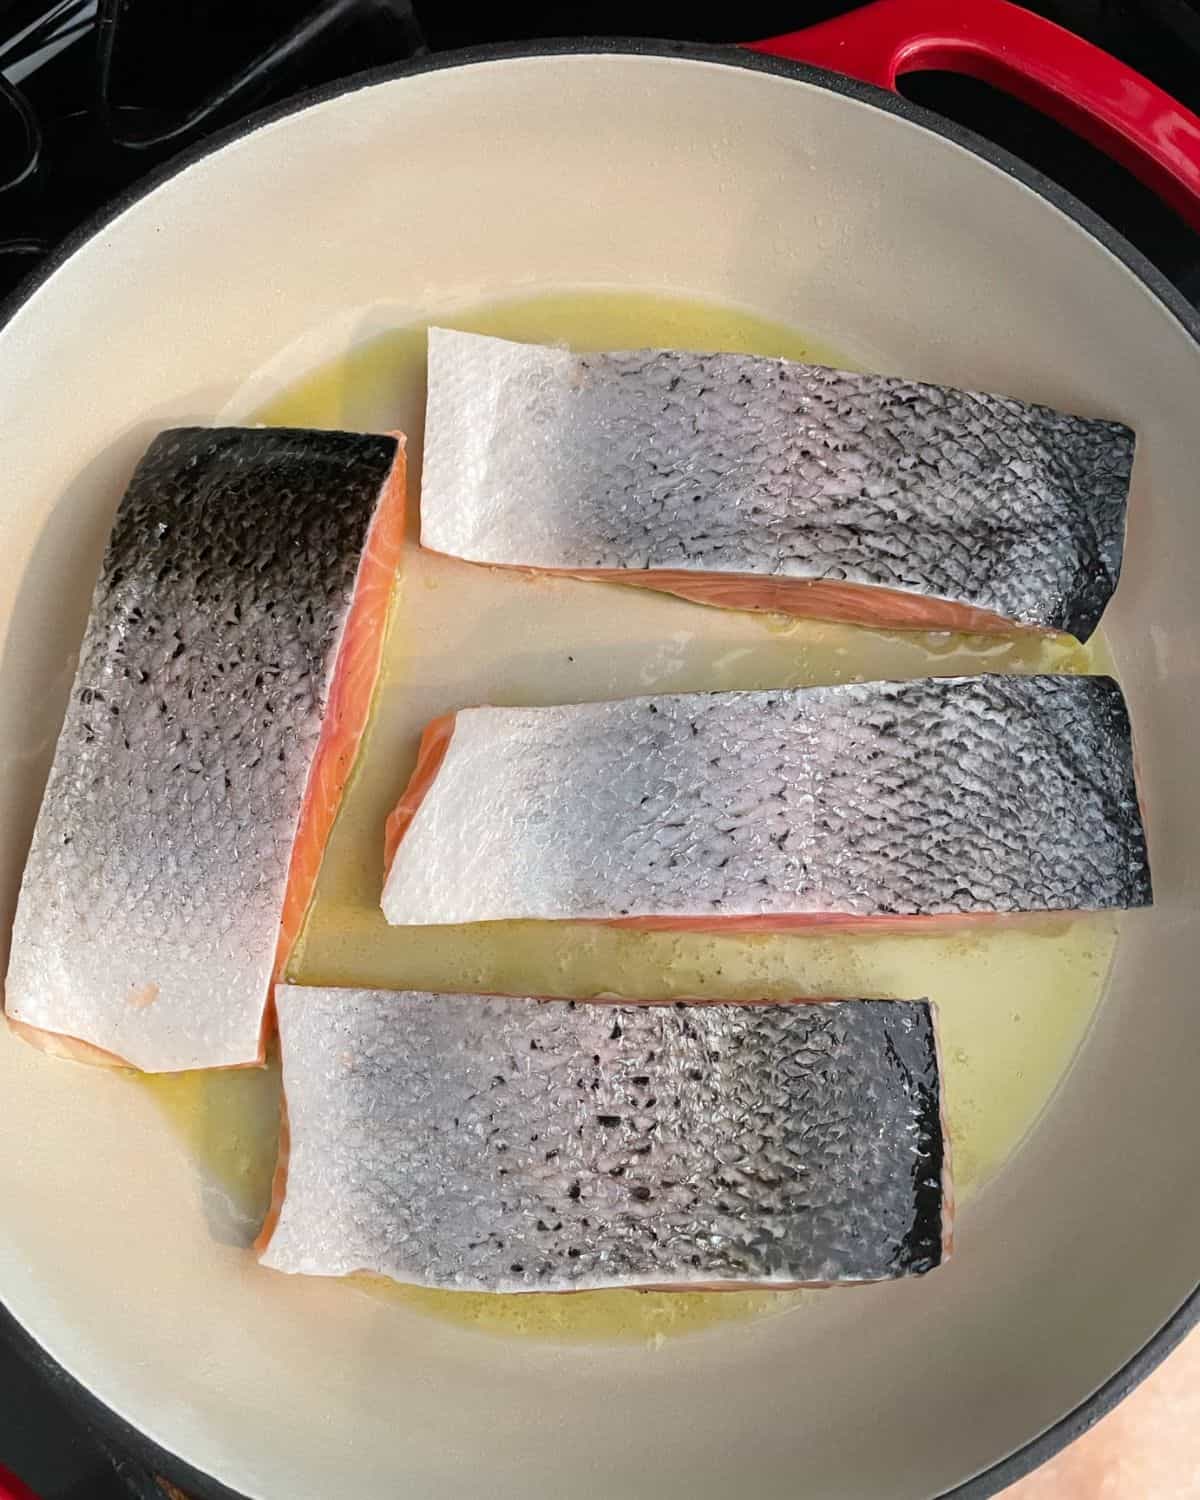 Fresh salmon searing in a pan, skin side up.